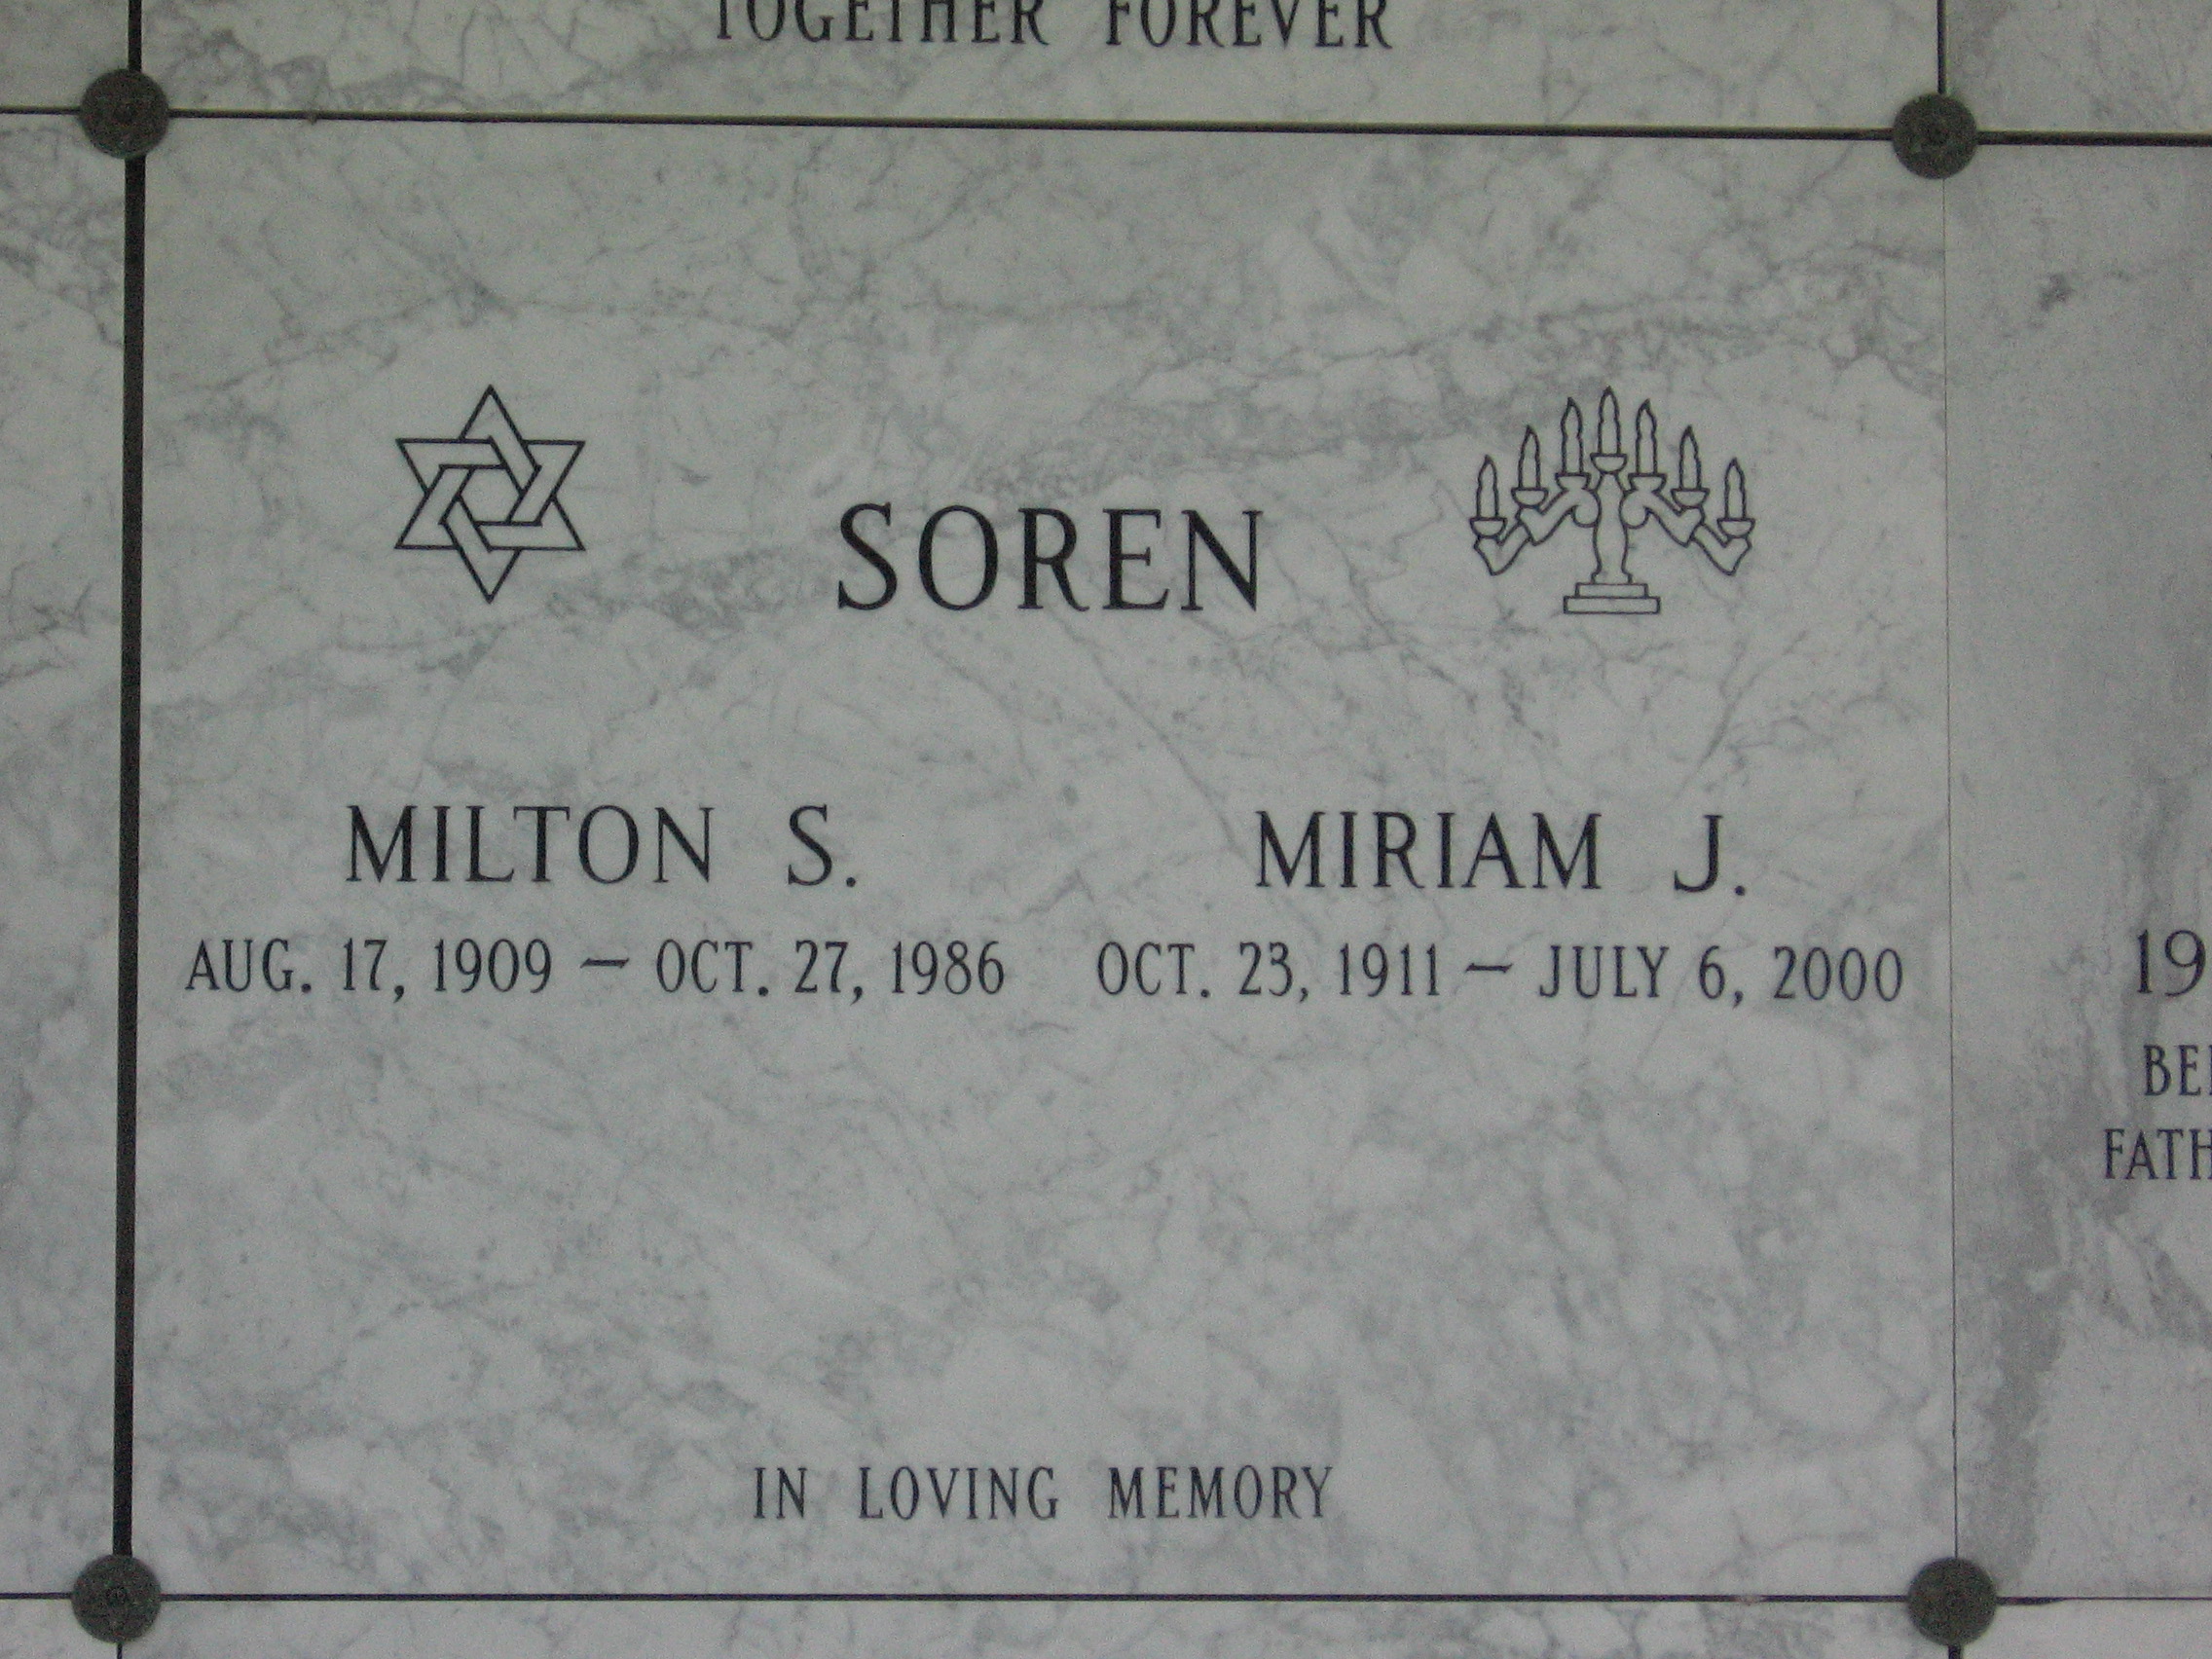 Milton S Soren